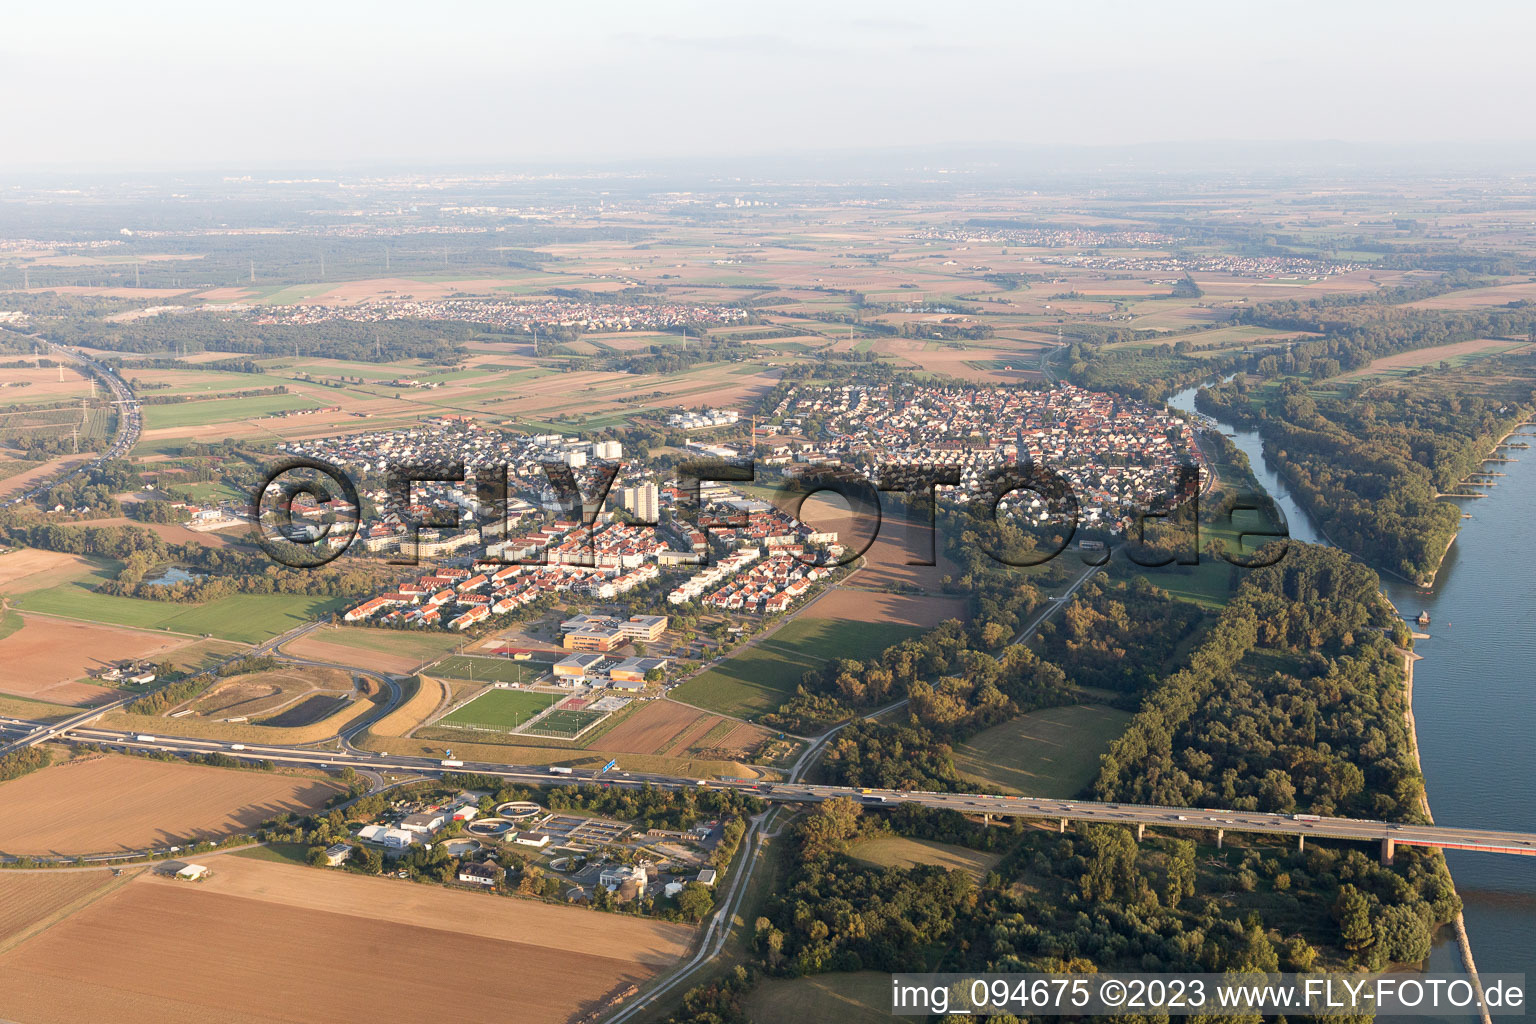 Vue aérienne de Ginsheim à Ginsheim-Gustavsburg dans le département Hesse, Allemagne